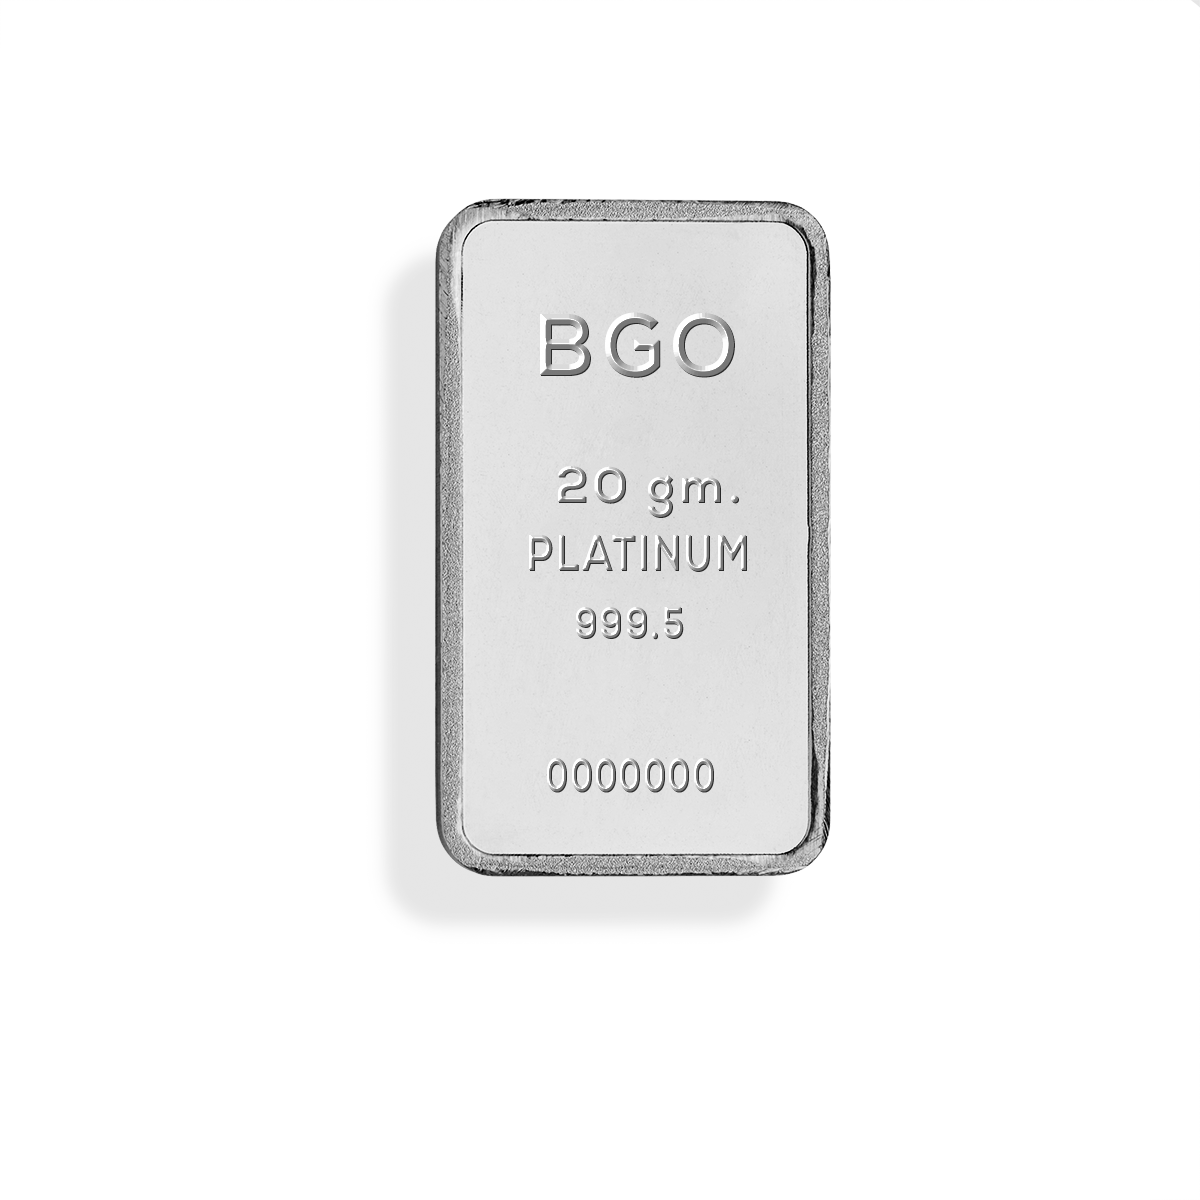 20 gm Platinum Bar